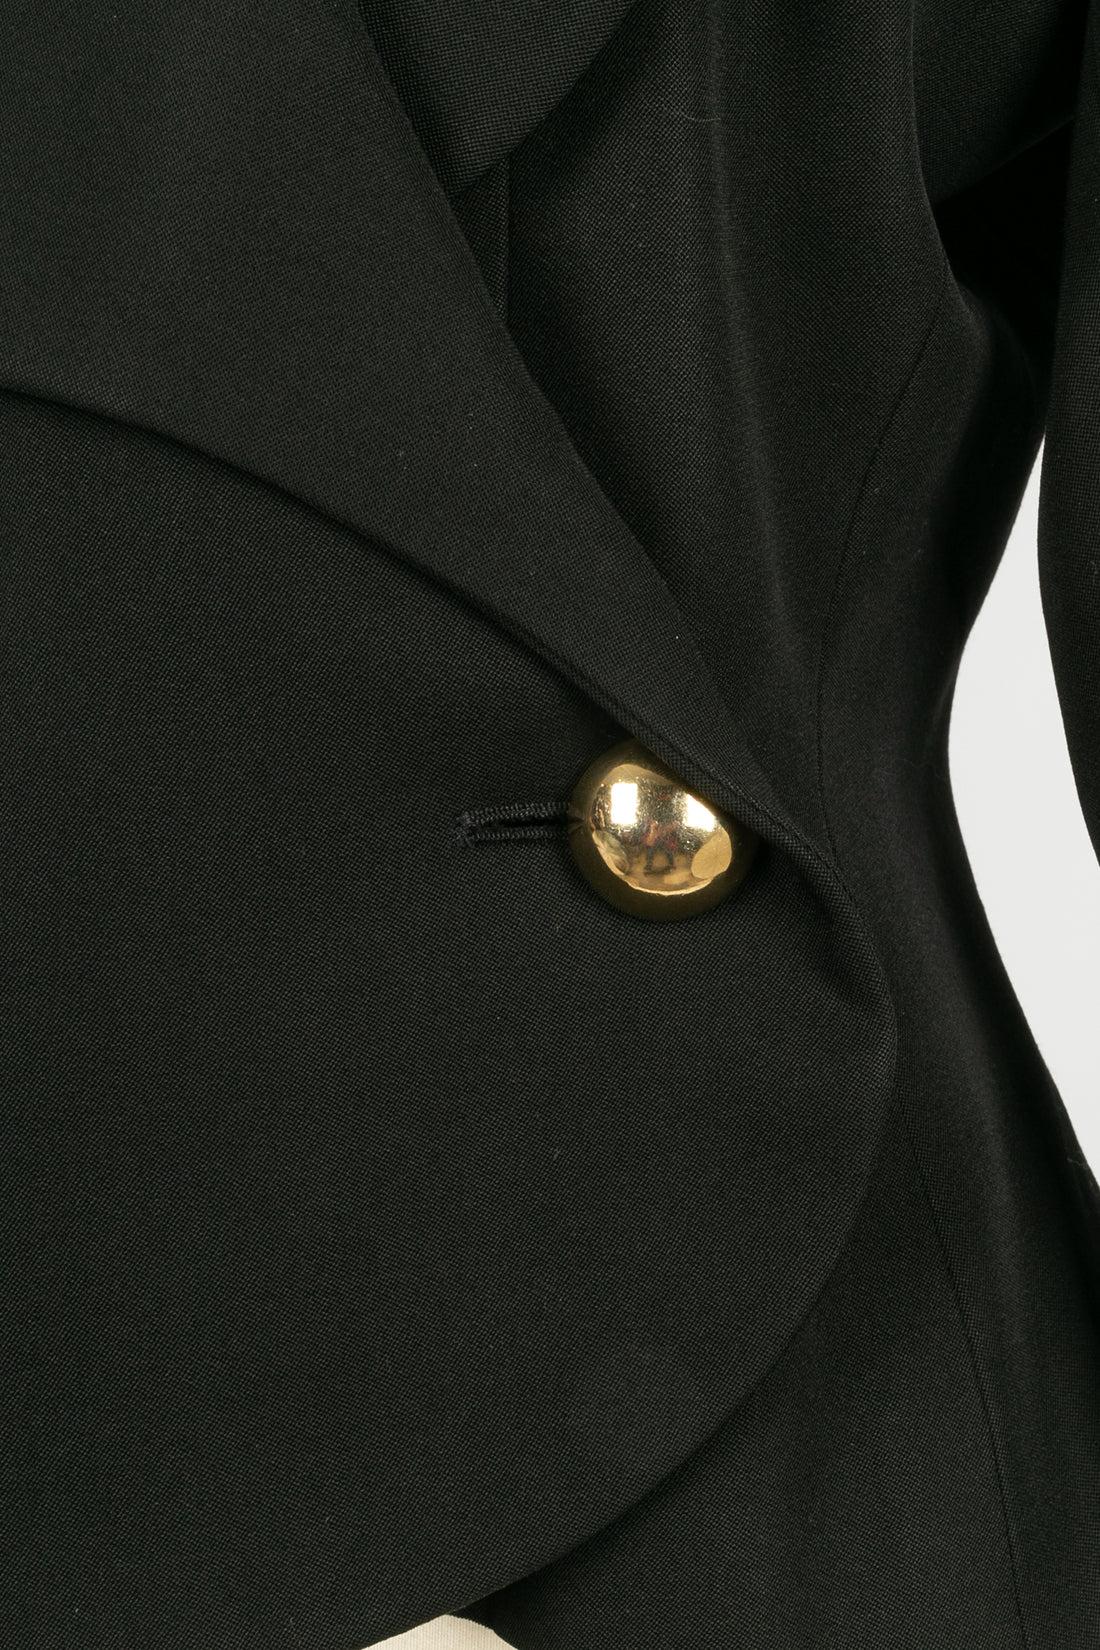 Yves Saint Laurent Black Skirt Suit For Sale 4